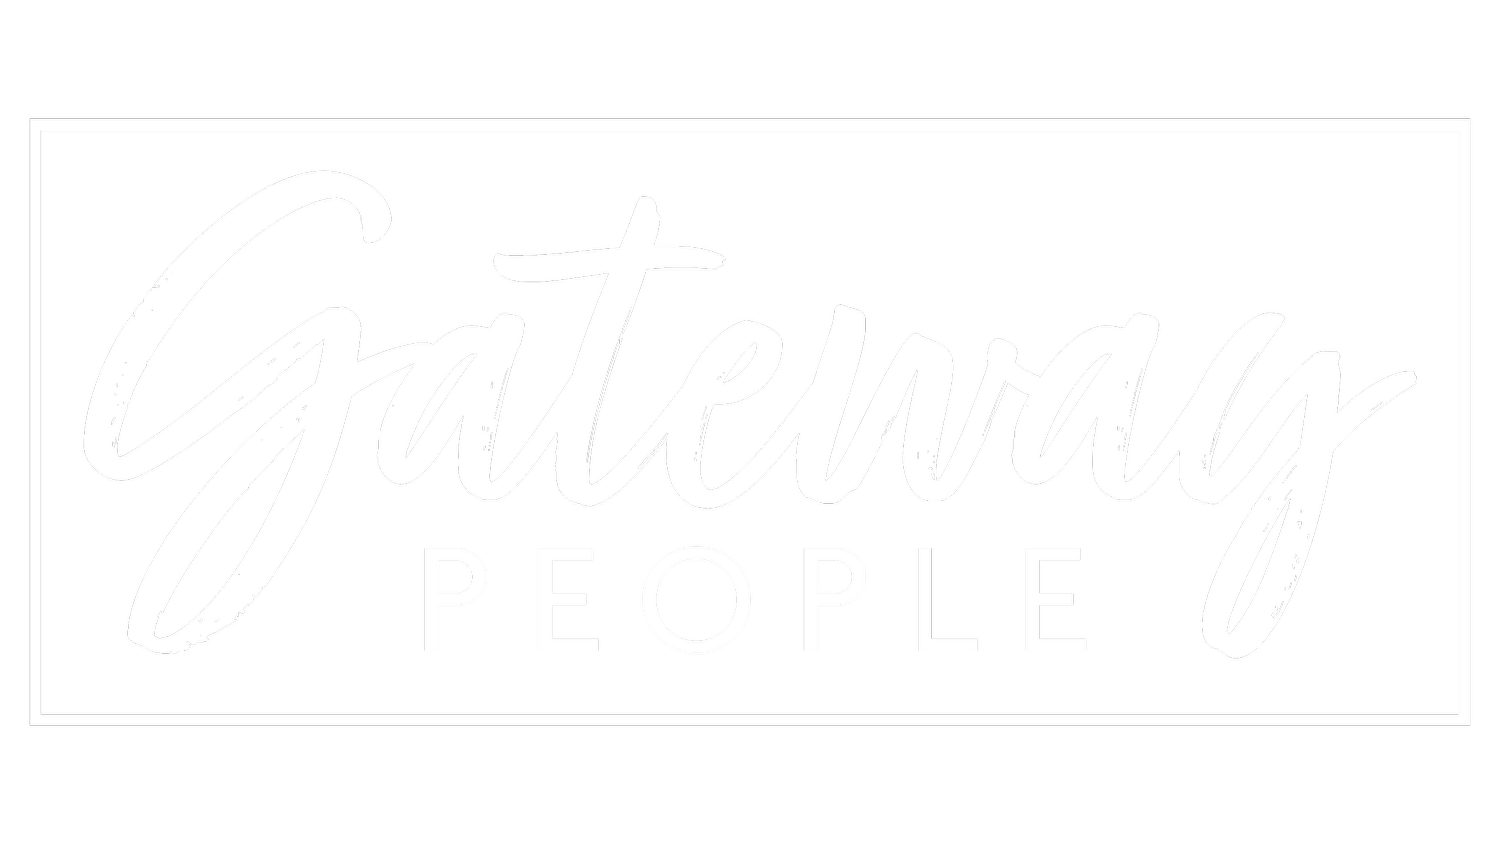 Gateway People